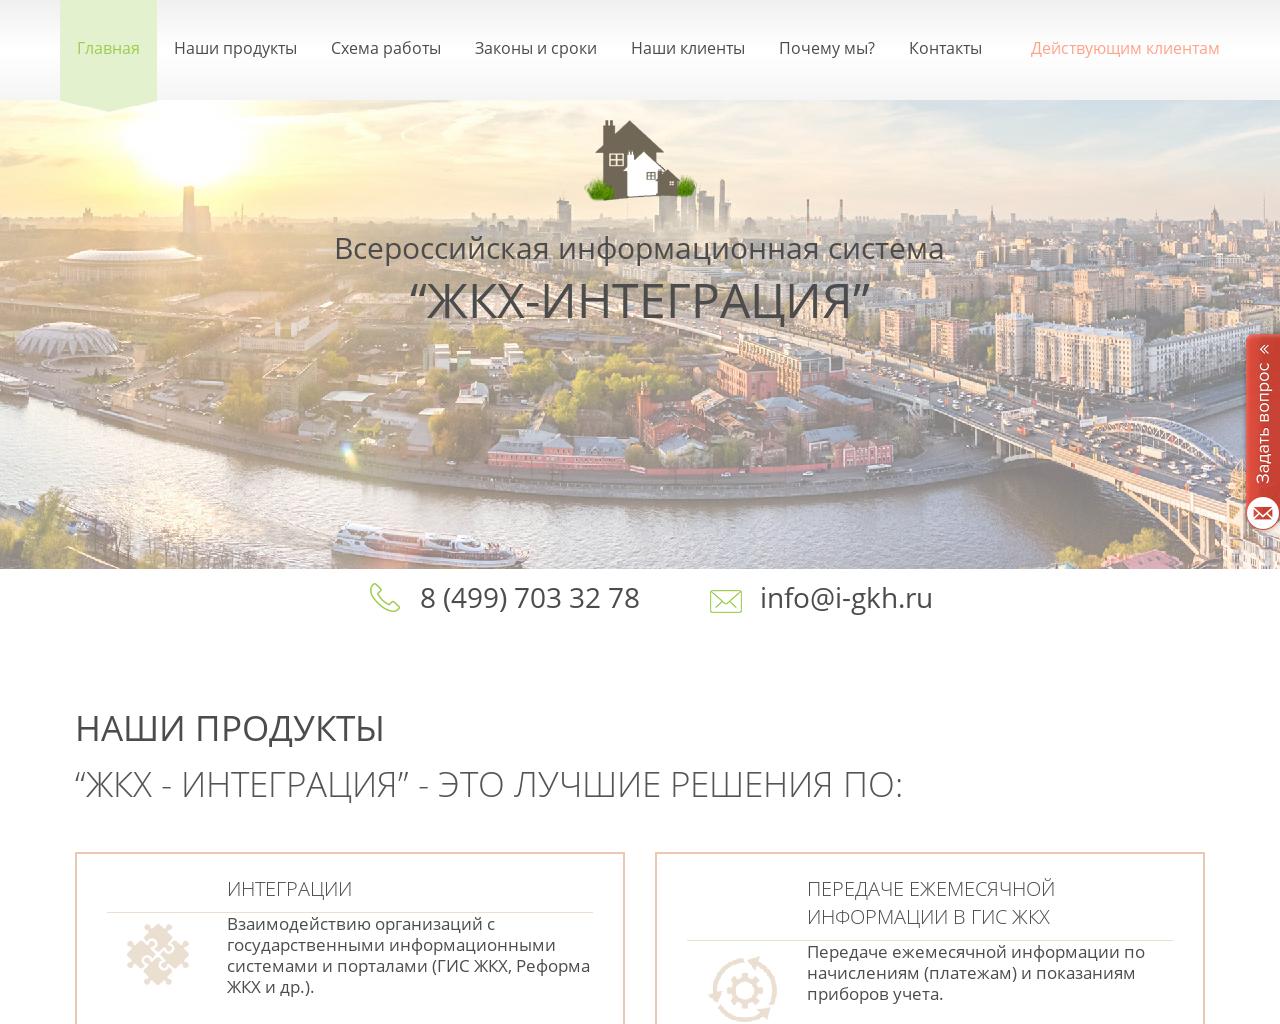 Изображение сайта i-gkh.ru в разрешении 1280x1024